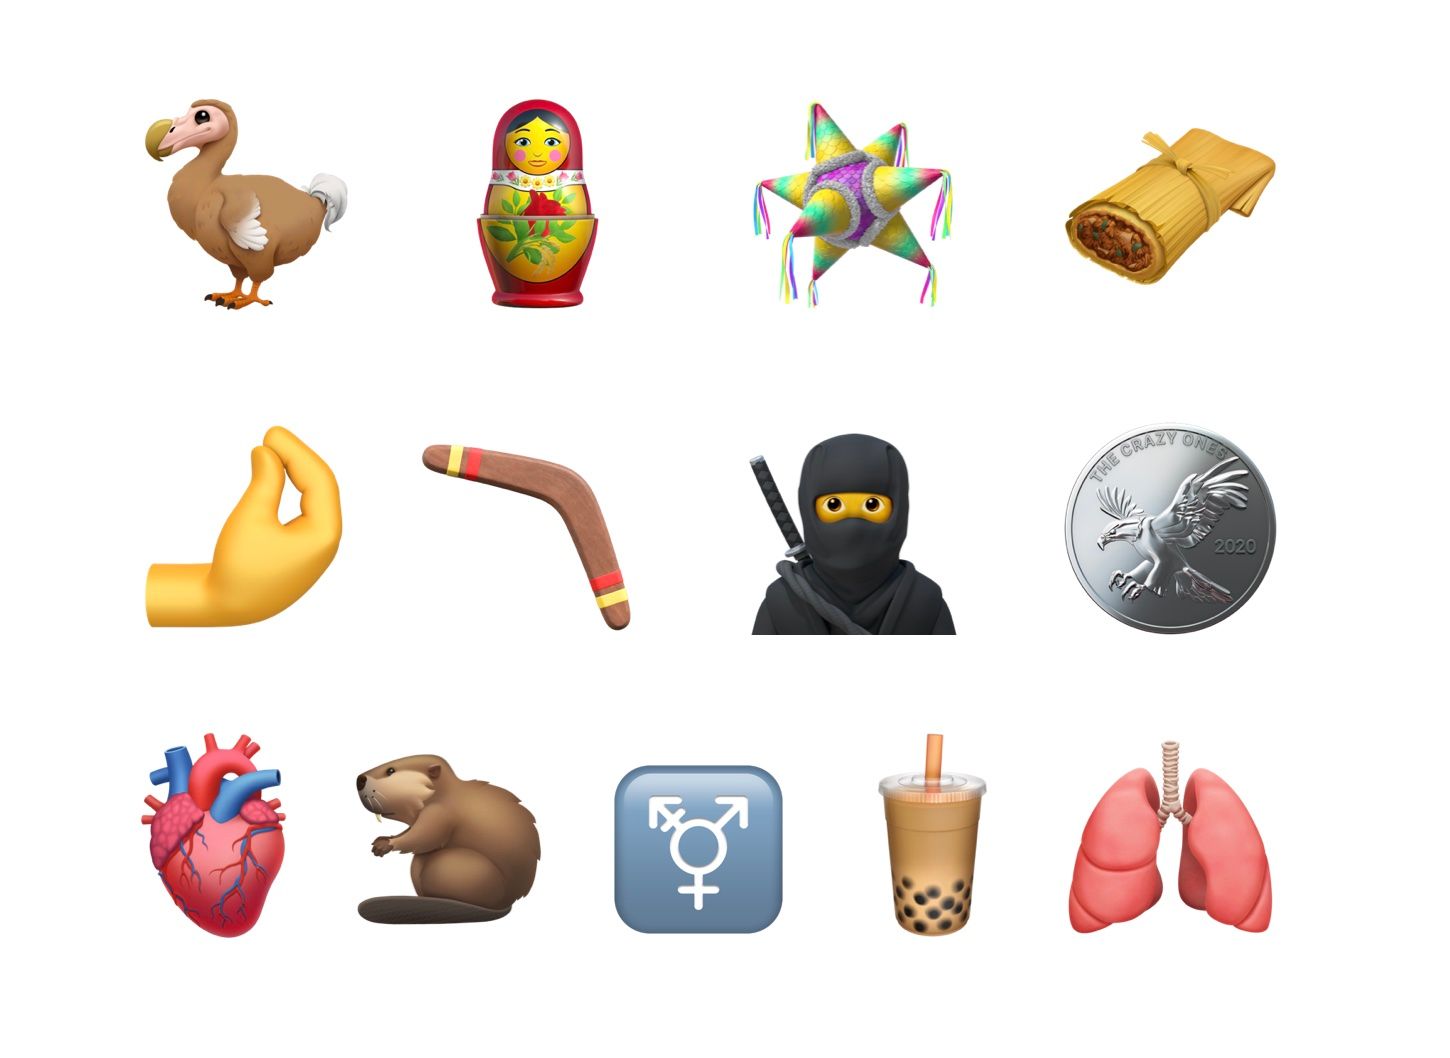 crapple-new-emoji-reveal-july-2020.jpg